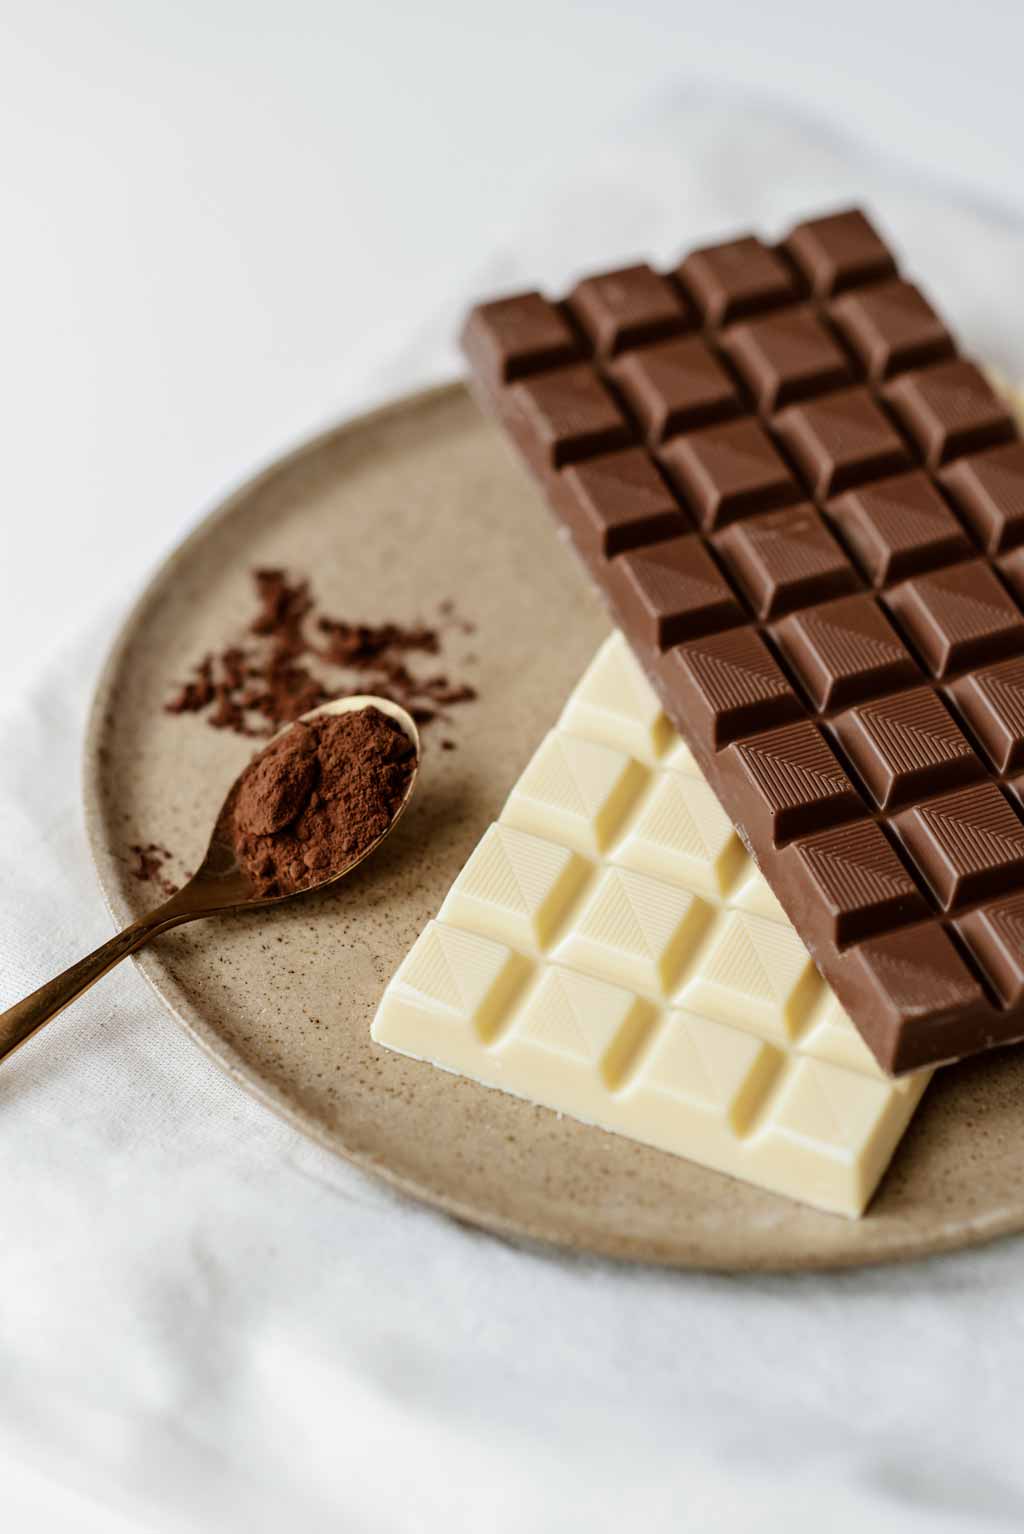 a dark chocolate bar on top of a white chocolate bar